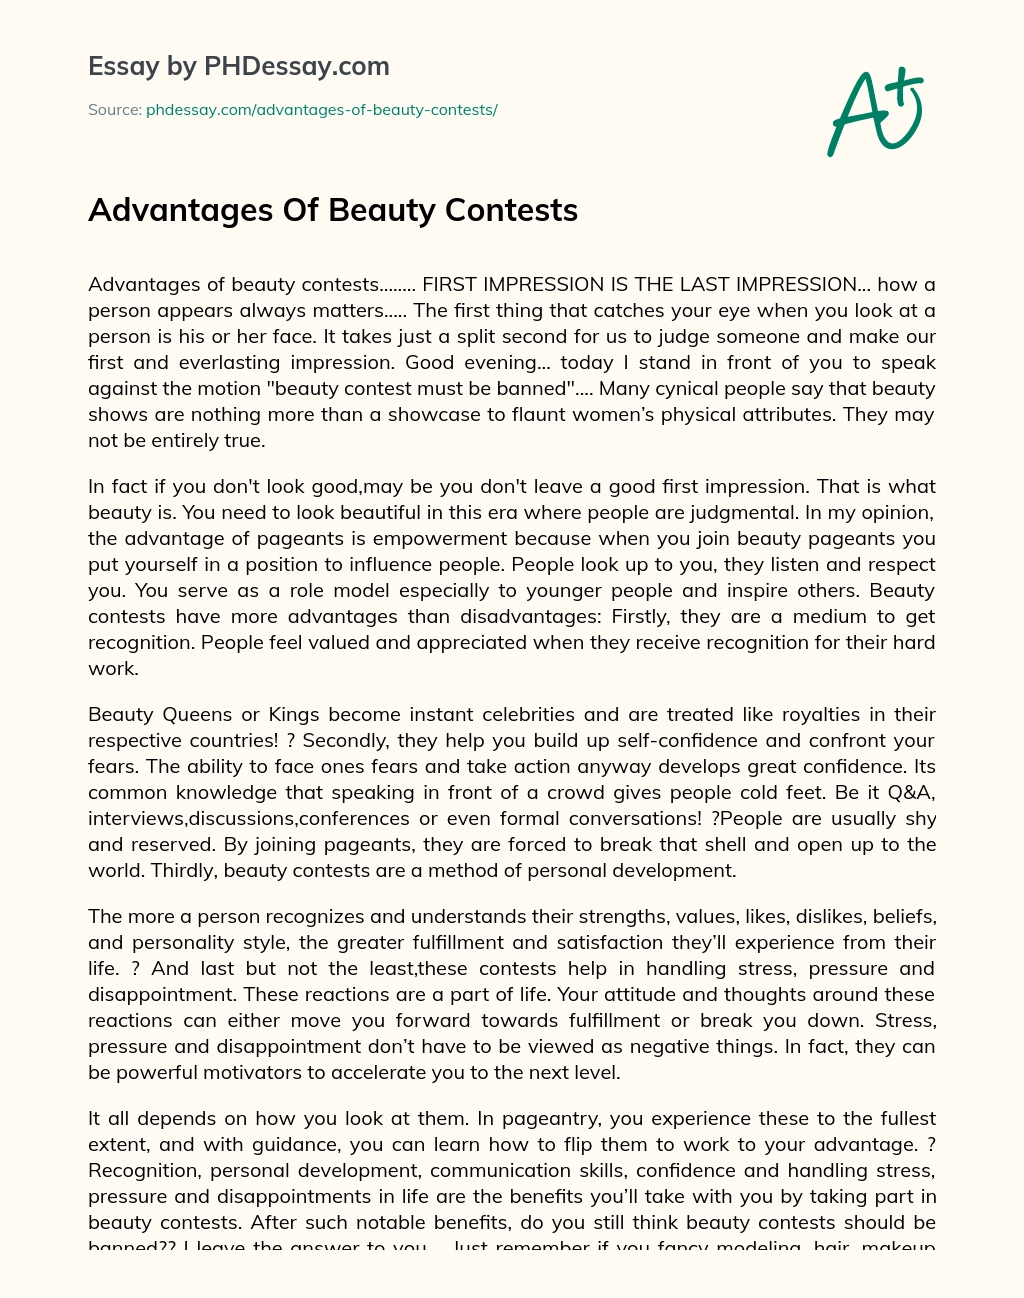 Advantages Of Beauty Contests essay